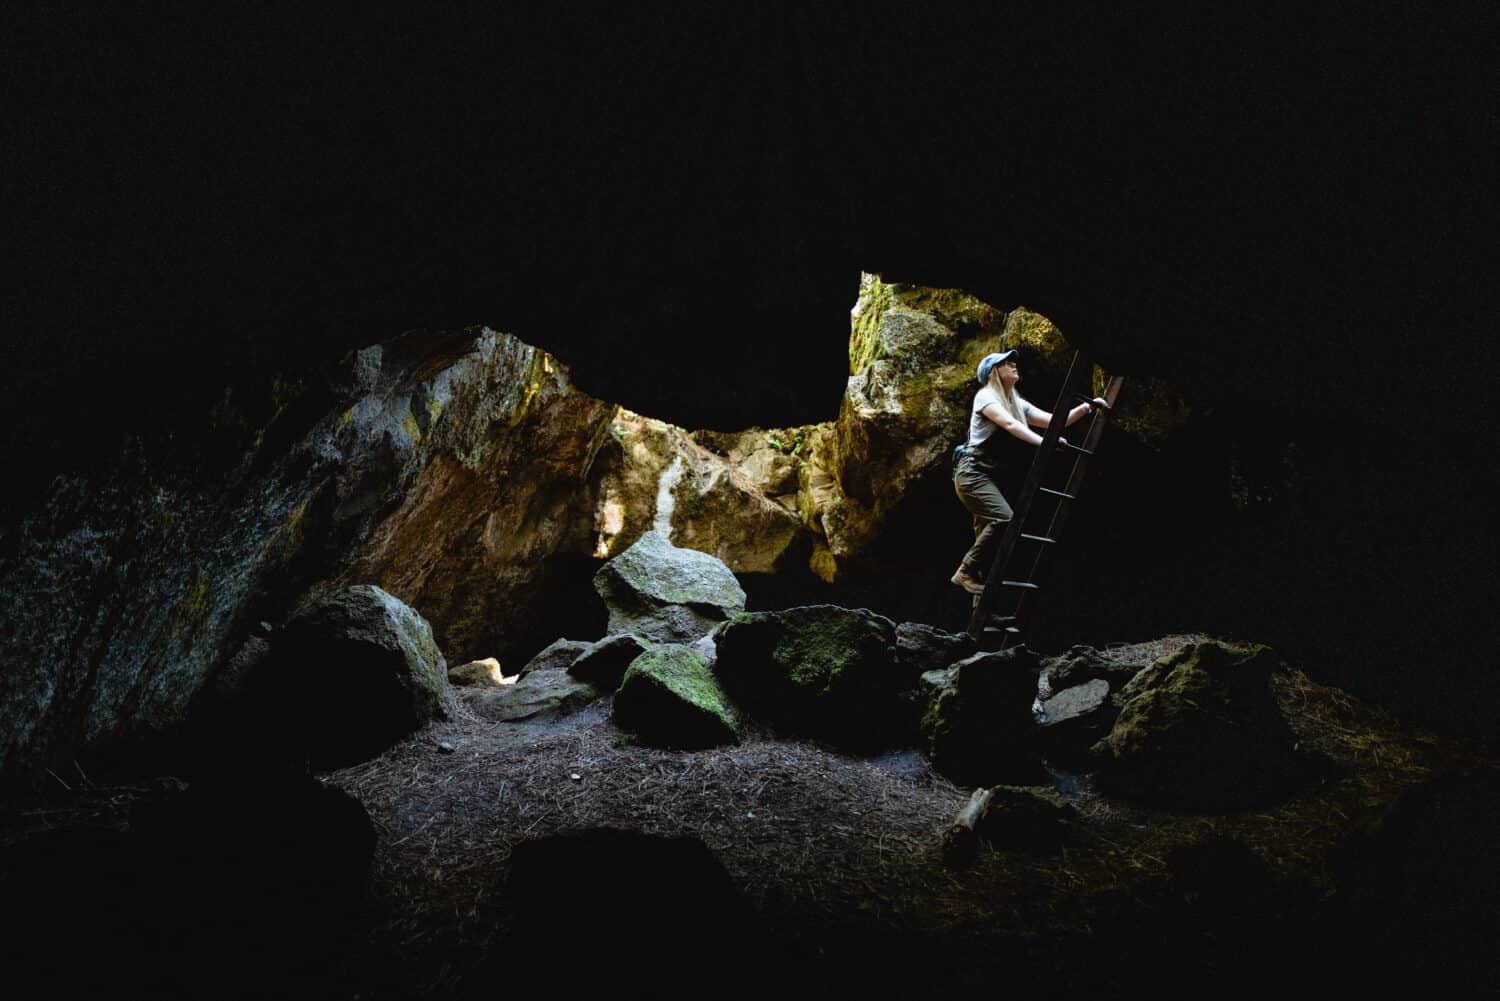 Skylight Cave in Oregon